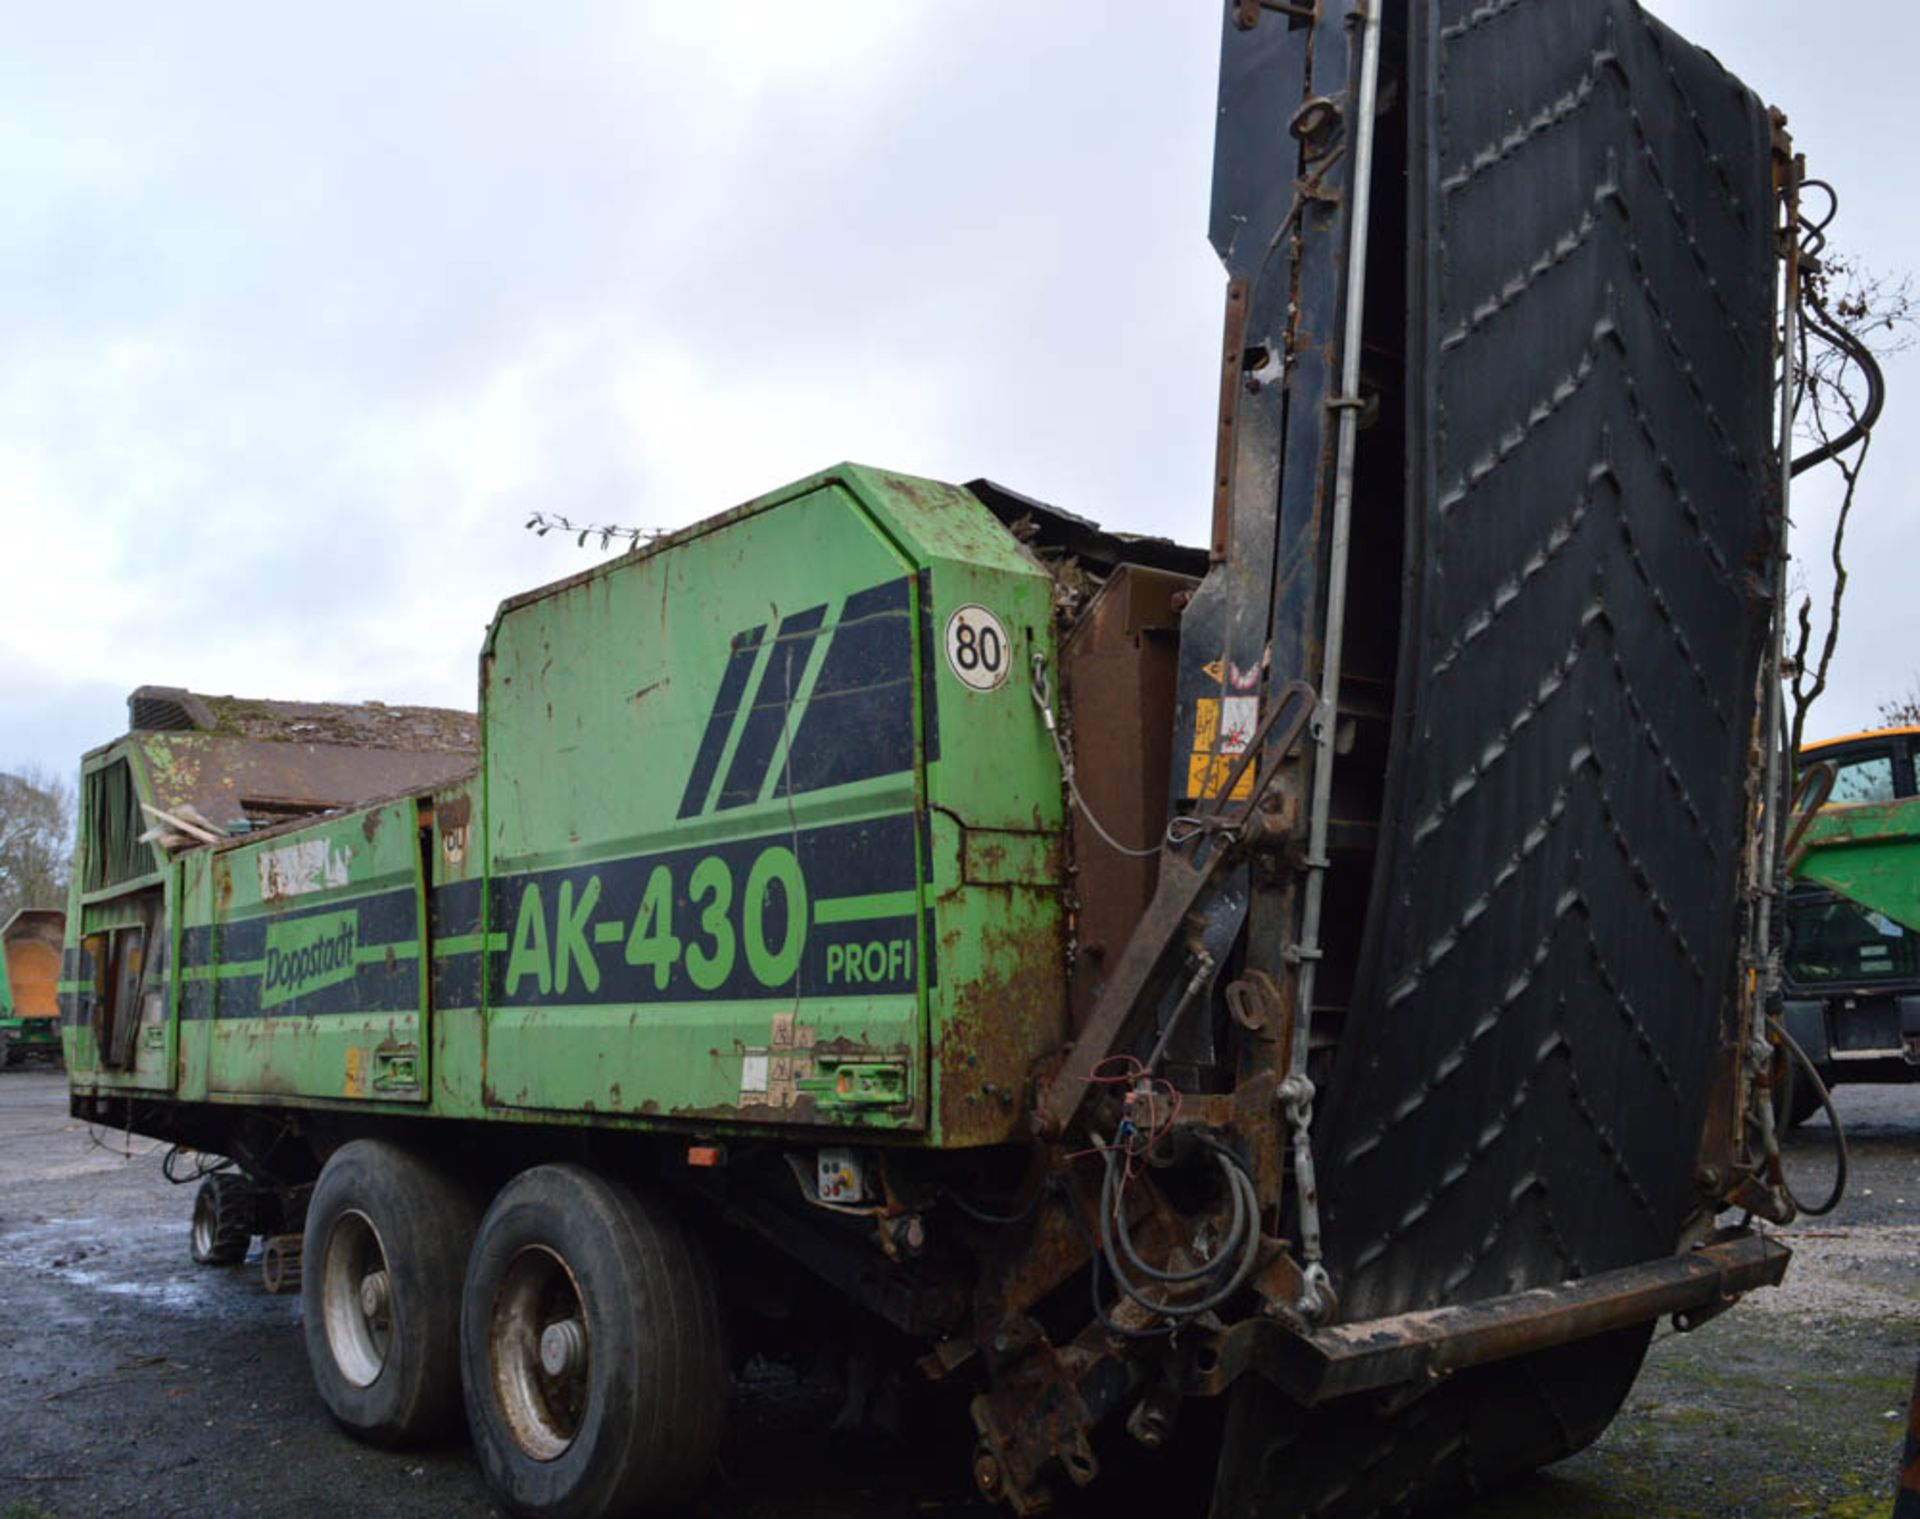 Doppstadt AK430 profi diesel driven waste shredder
Year: 2002
S/N: 306 - Image 3 of 7